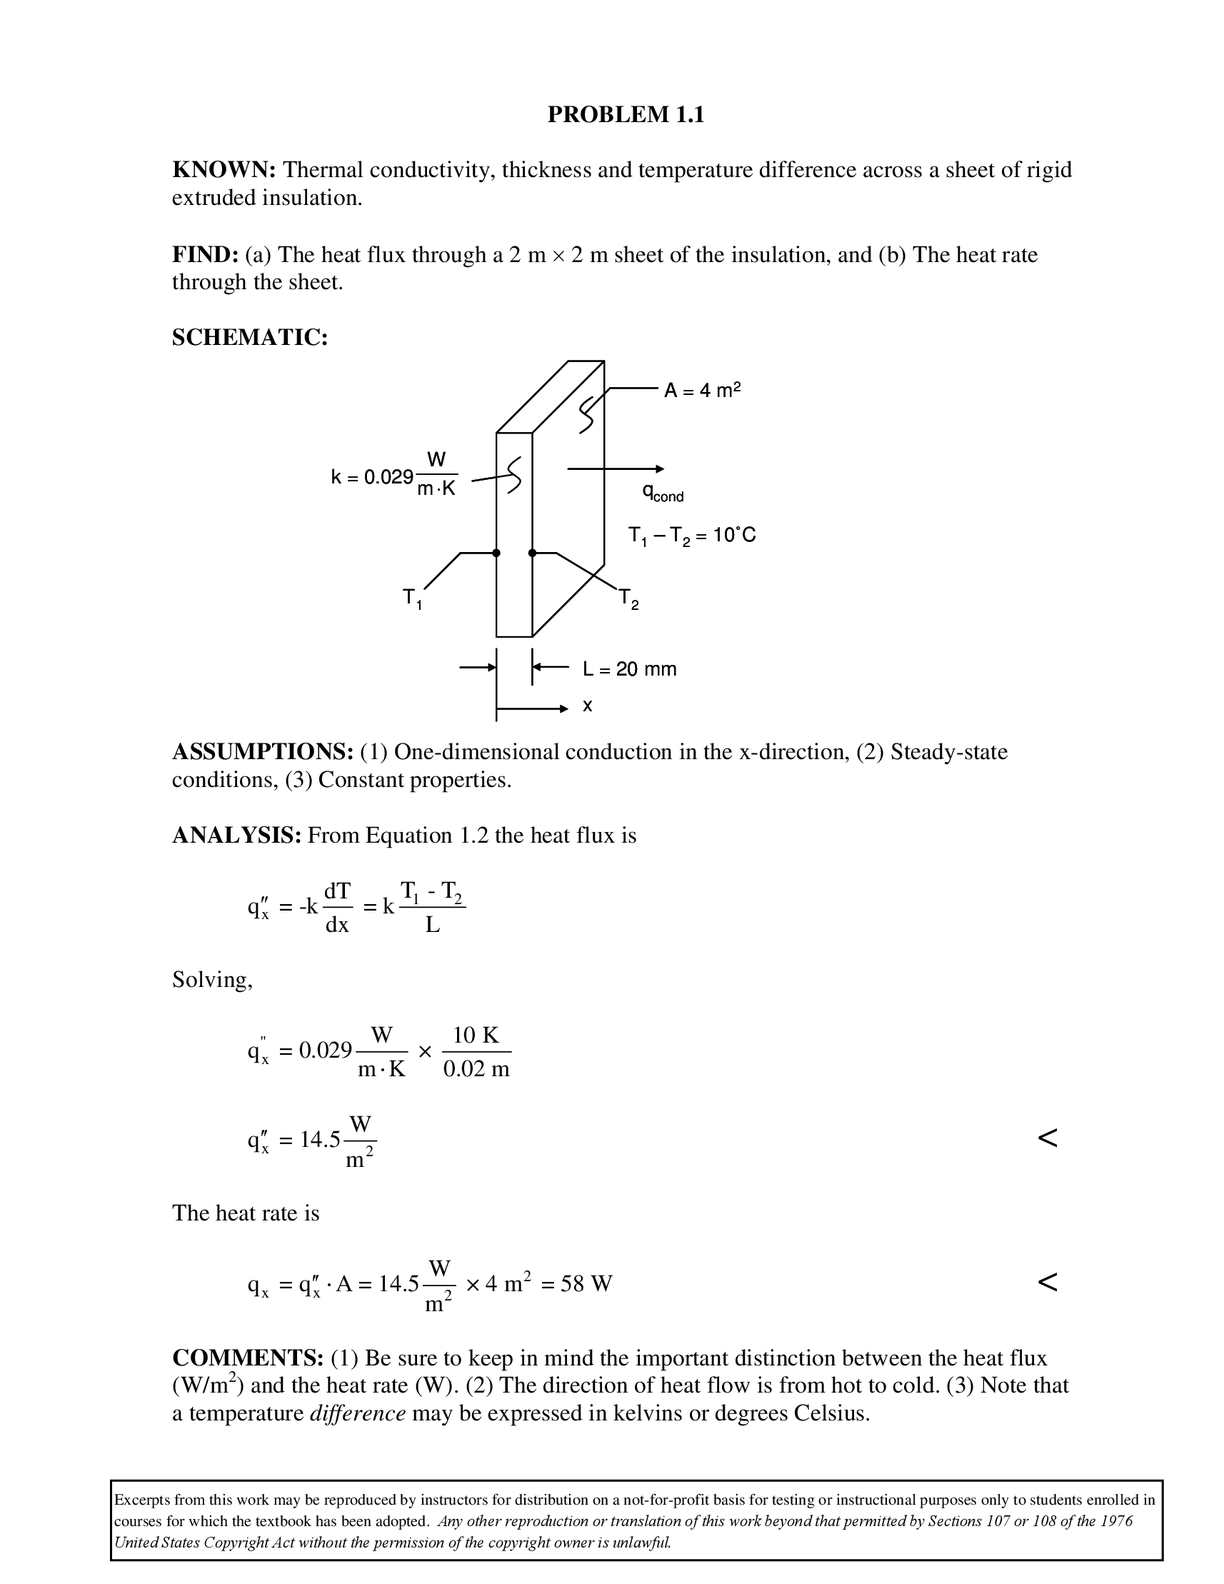 fundamentals of engineering thermodynamics 9